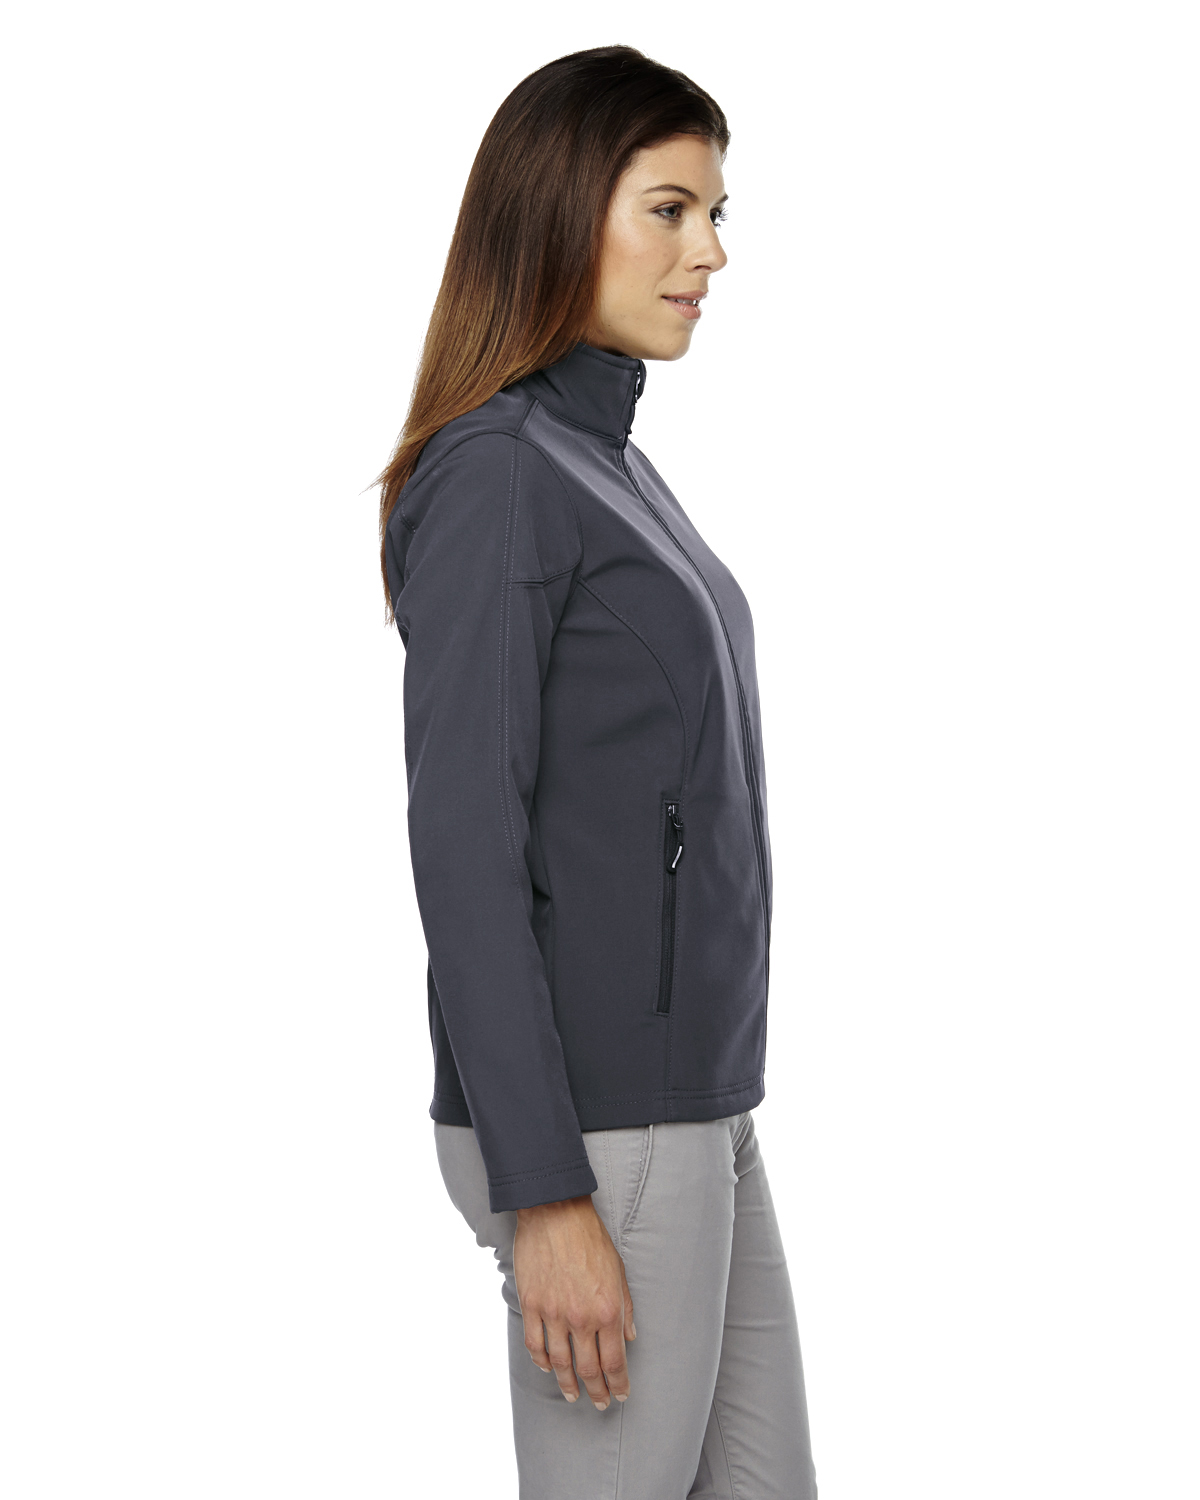 Core 365 Womens Cruise 2 Layer Fleece Bonded Soft Shell Pocket Jacket